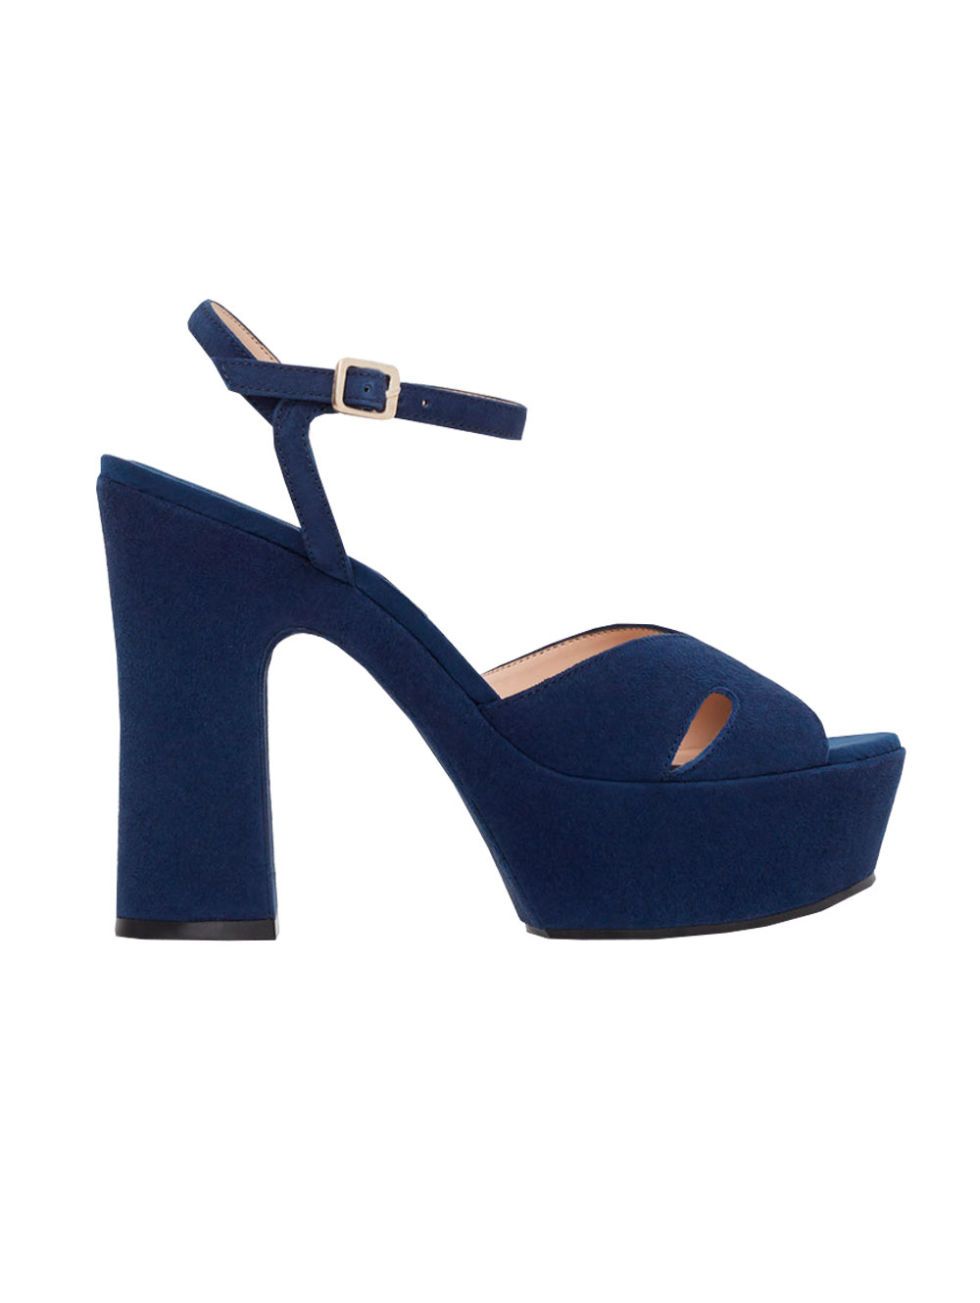 High heels, Azure, Black, Basic pump, Electric blue, Beige, Tan, Sandal, Foot, Strap, 